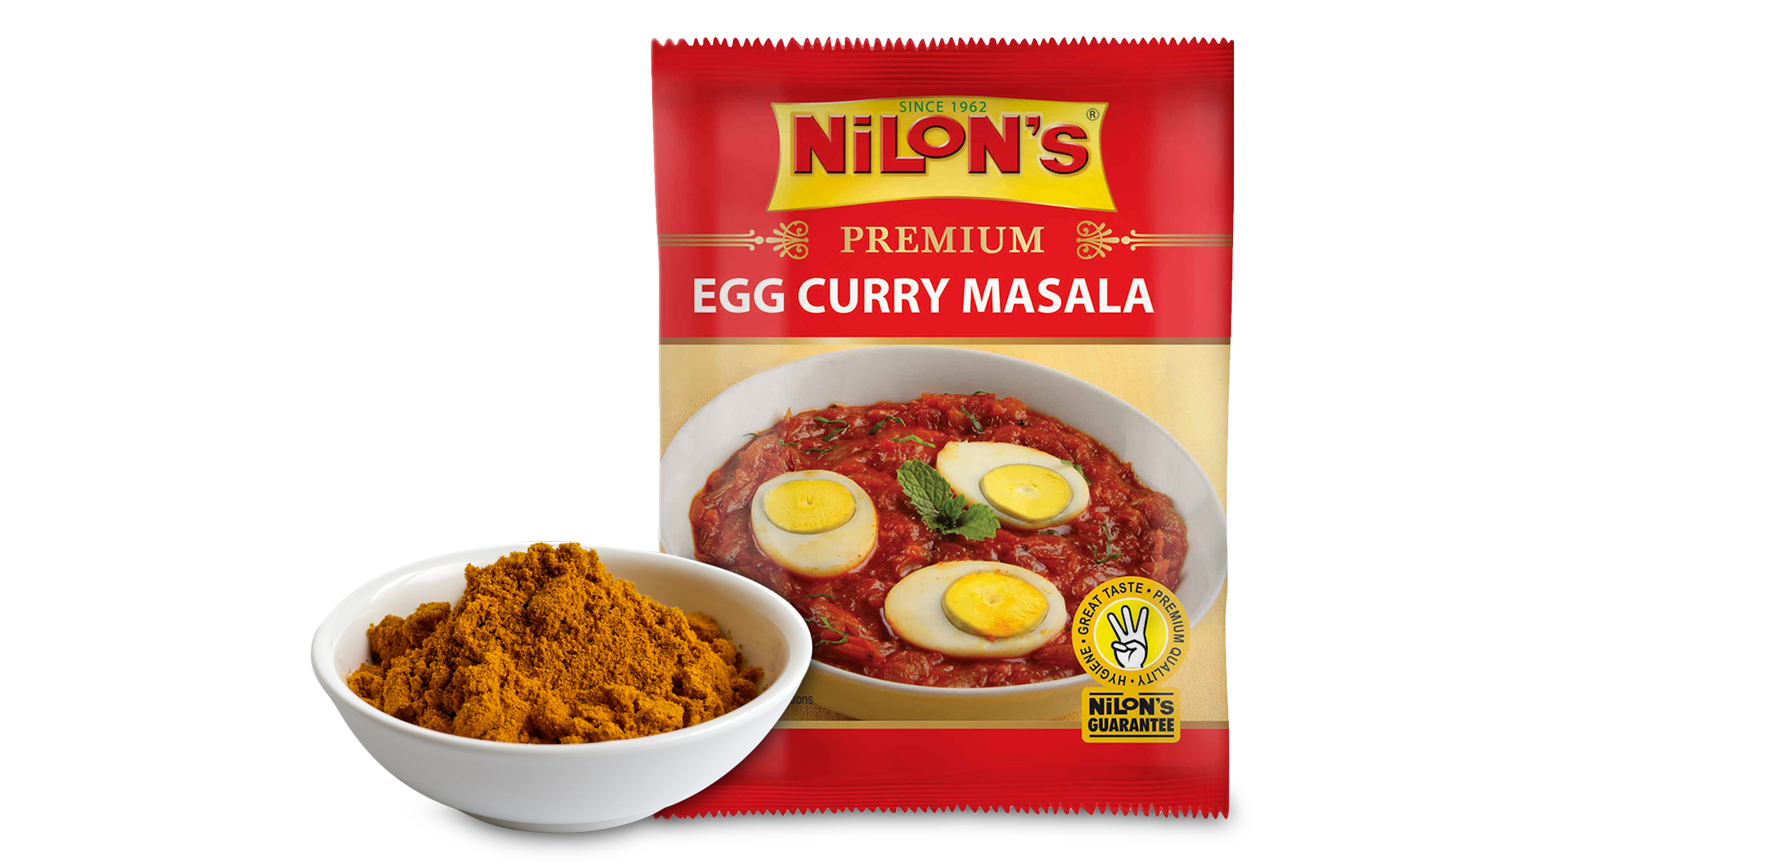  Egg Curry Masala